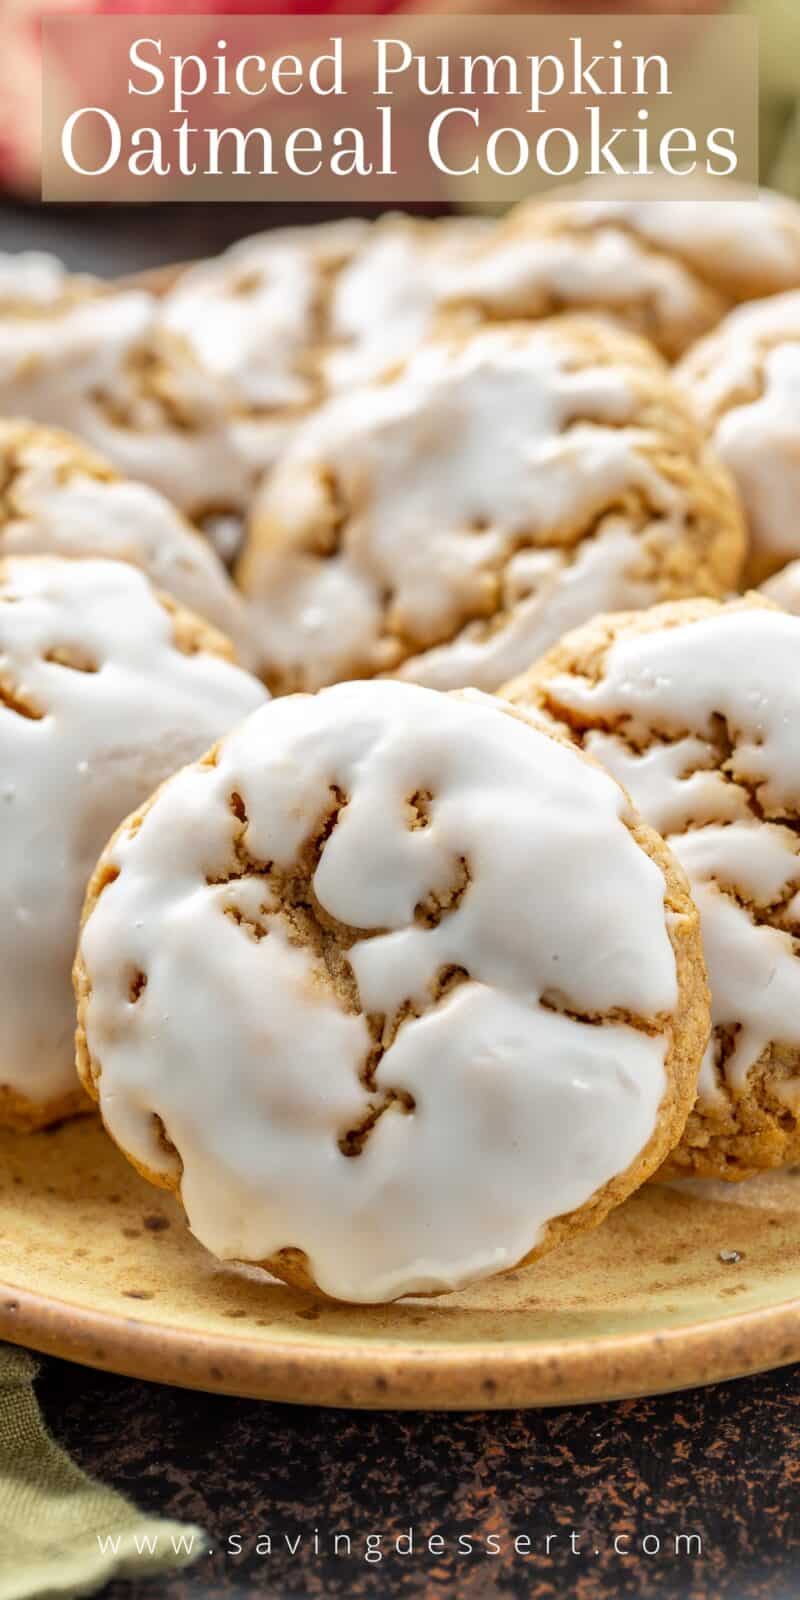 A closeup of a plate of iced oatmeal pumpkin cookies